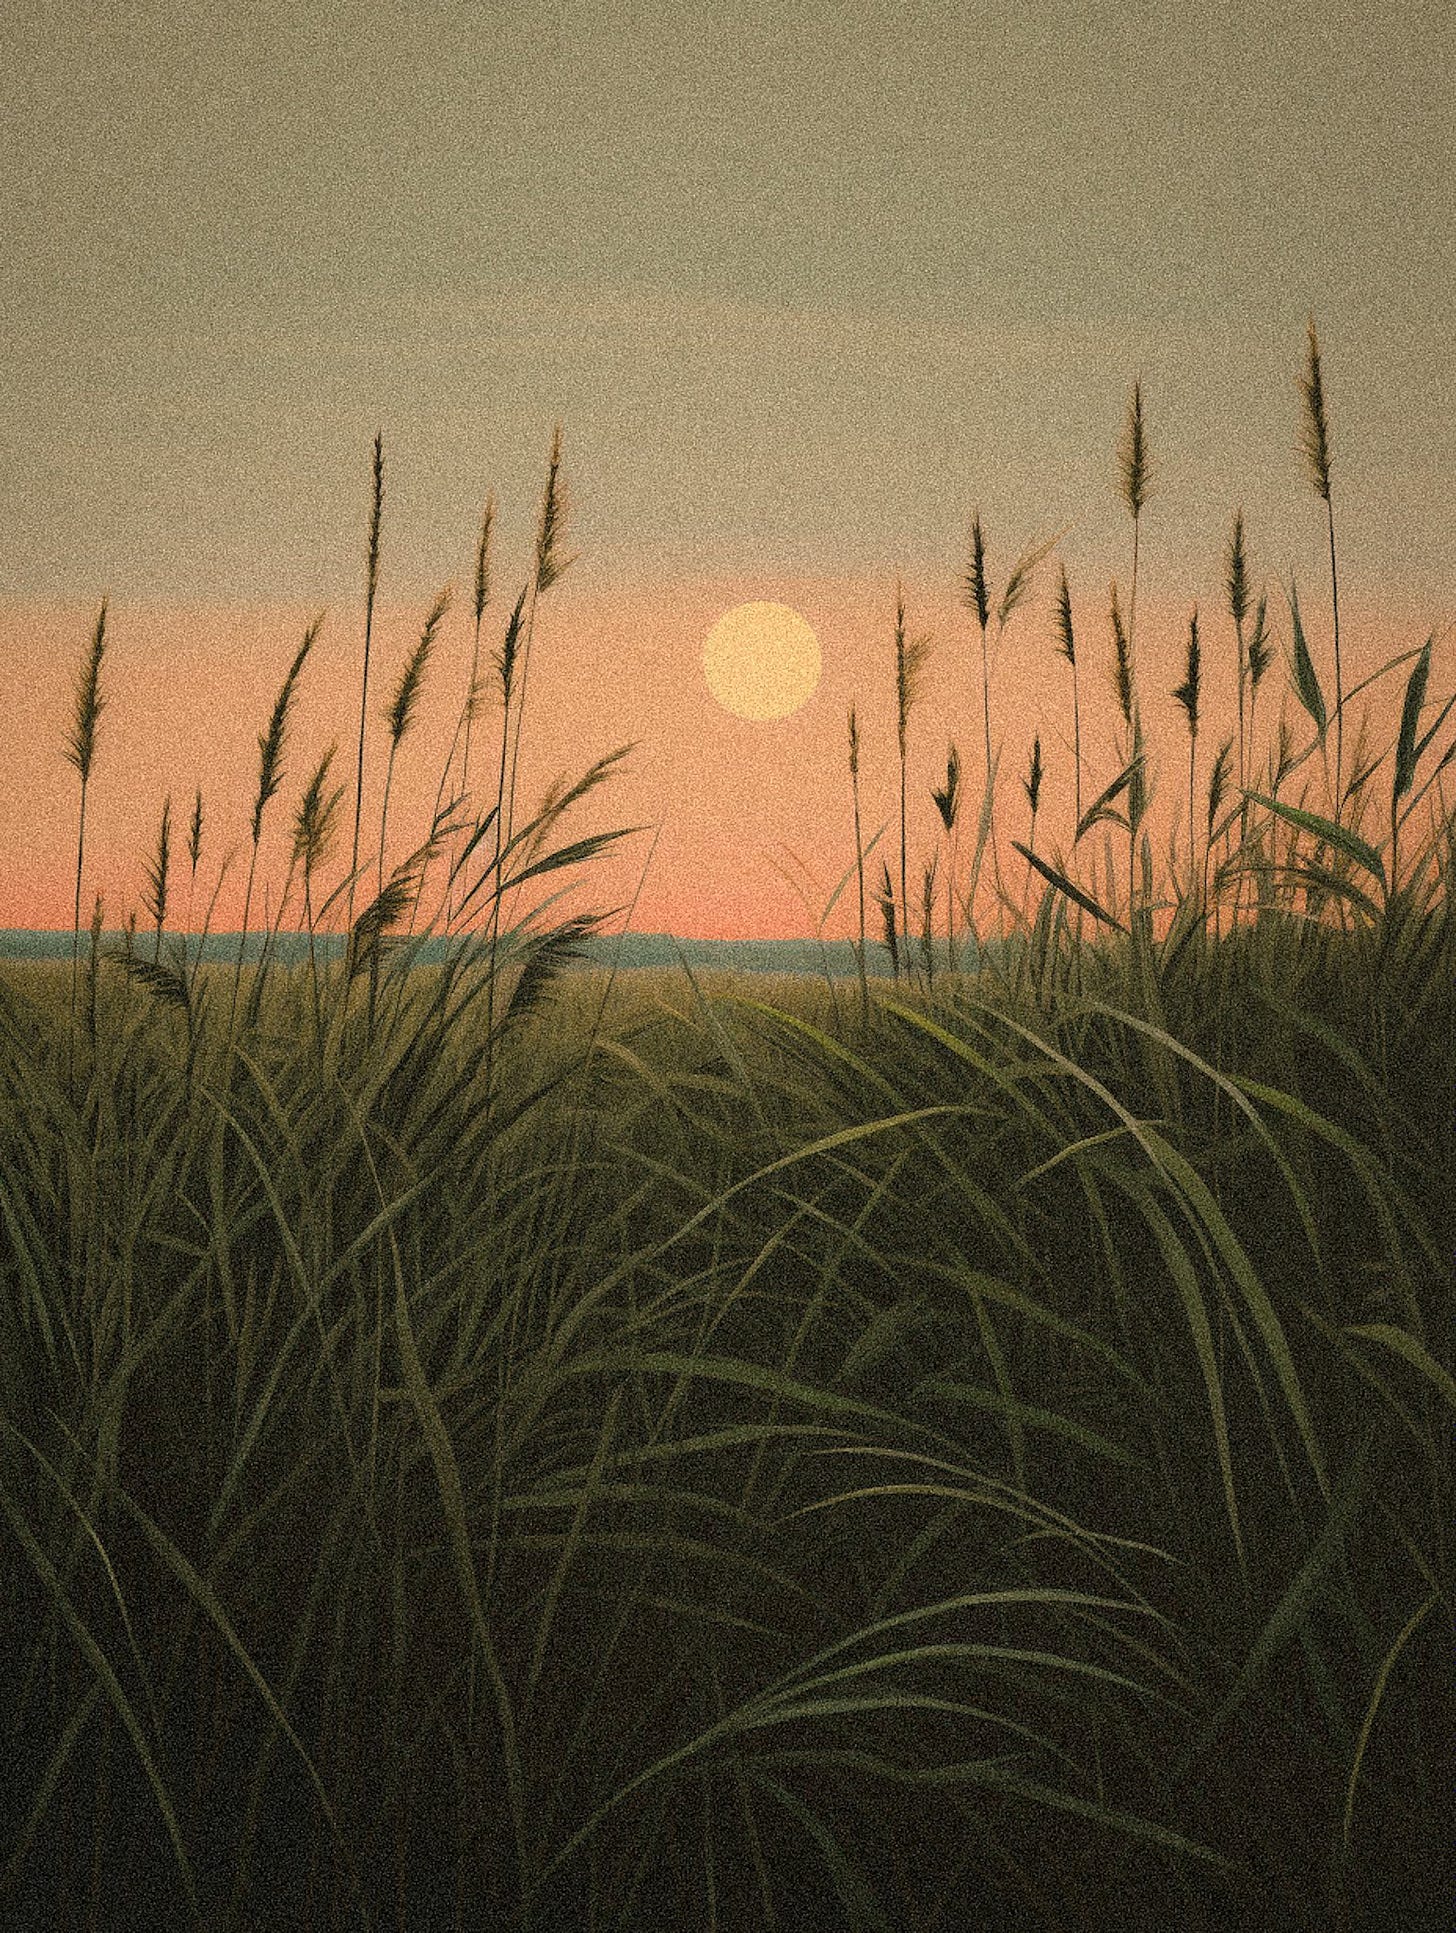 Sunset through fields of wheat